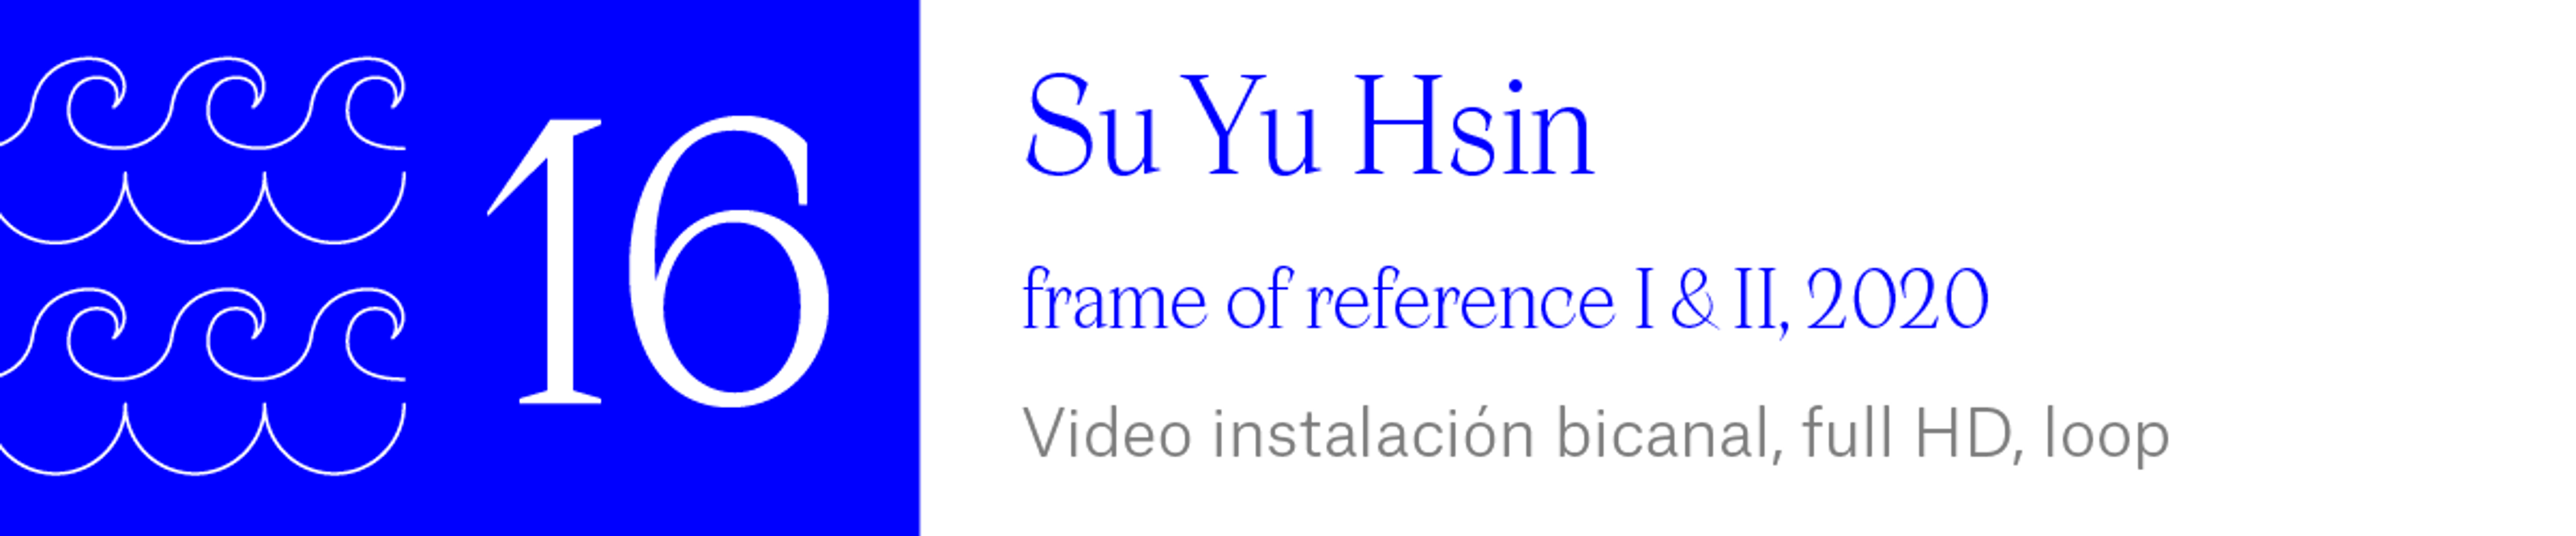 The Wave (16) Su Yu Hsin - frame of reference I & II, 2020. Video instalación bicanal, full HD, loop